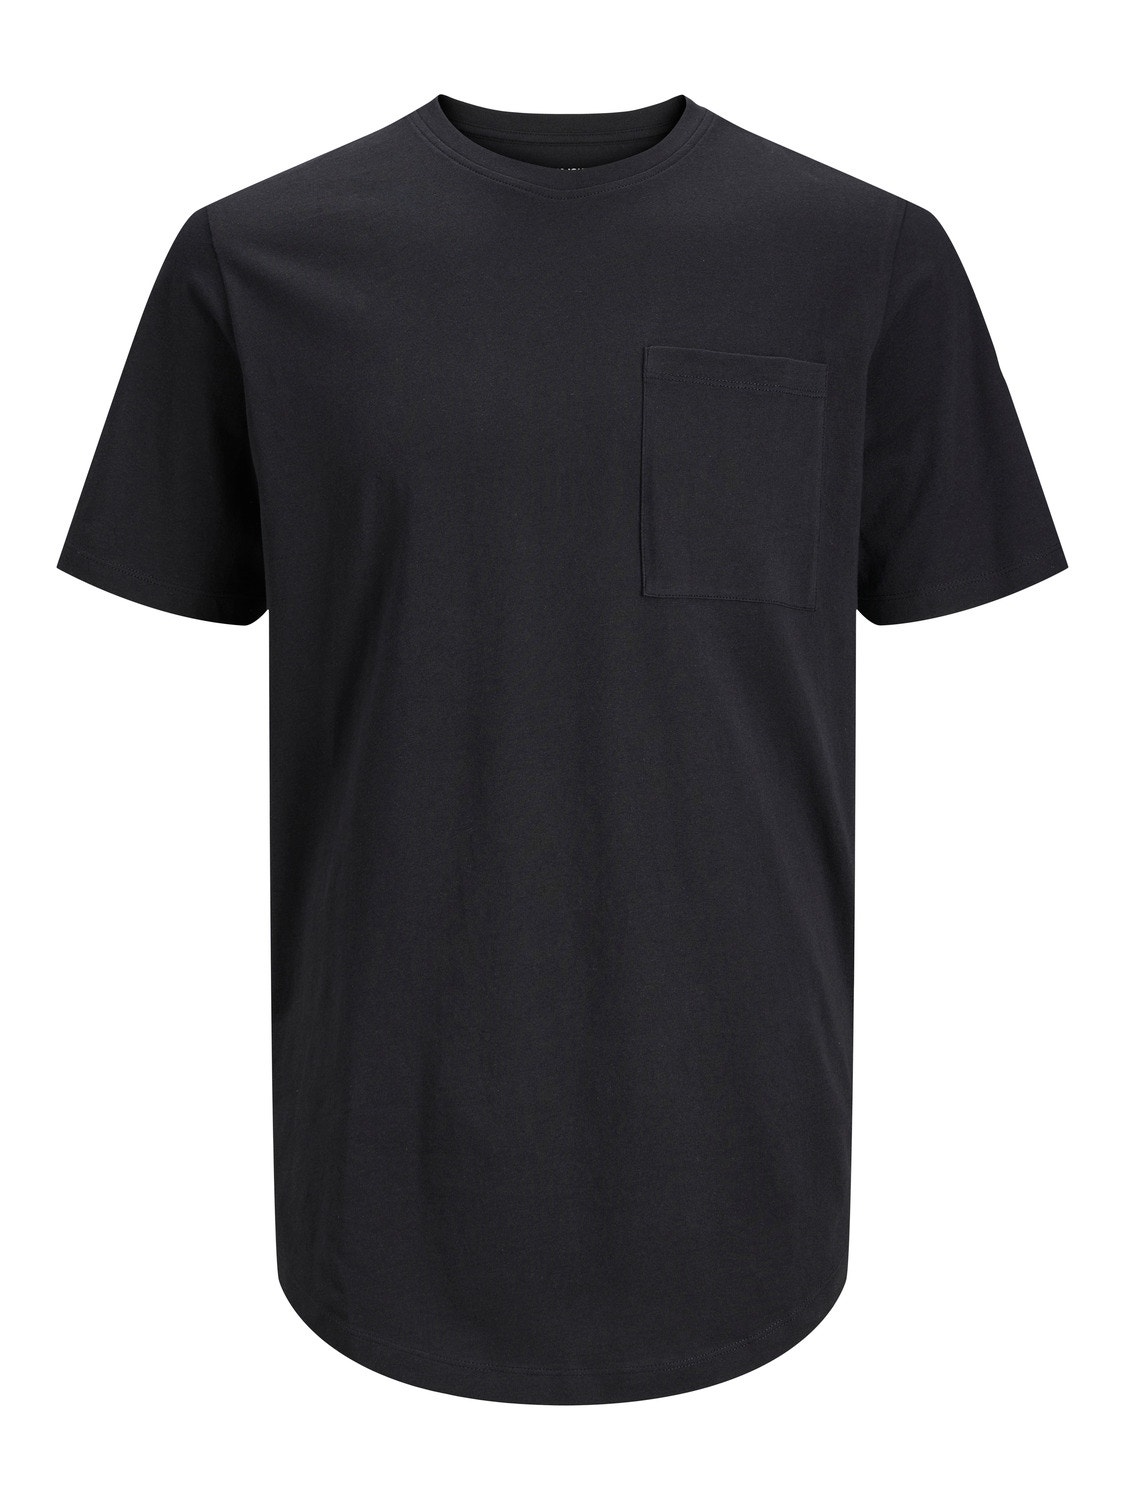 Jack & Jones Καλοκαιρινό μπλουζάκι -Black - 12210945